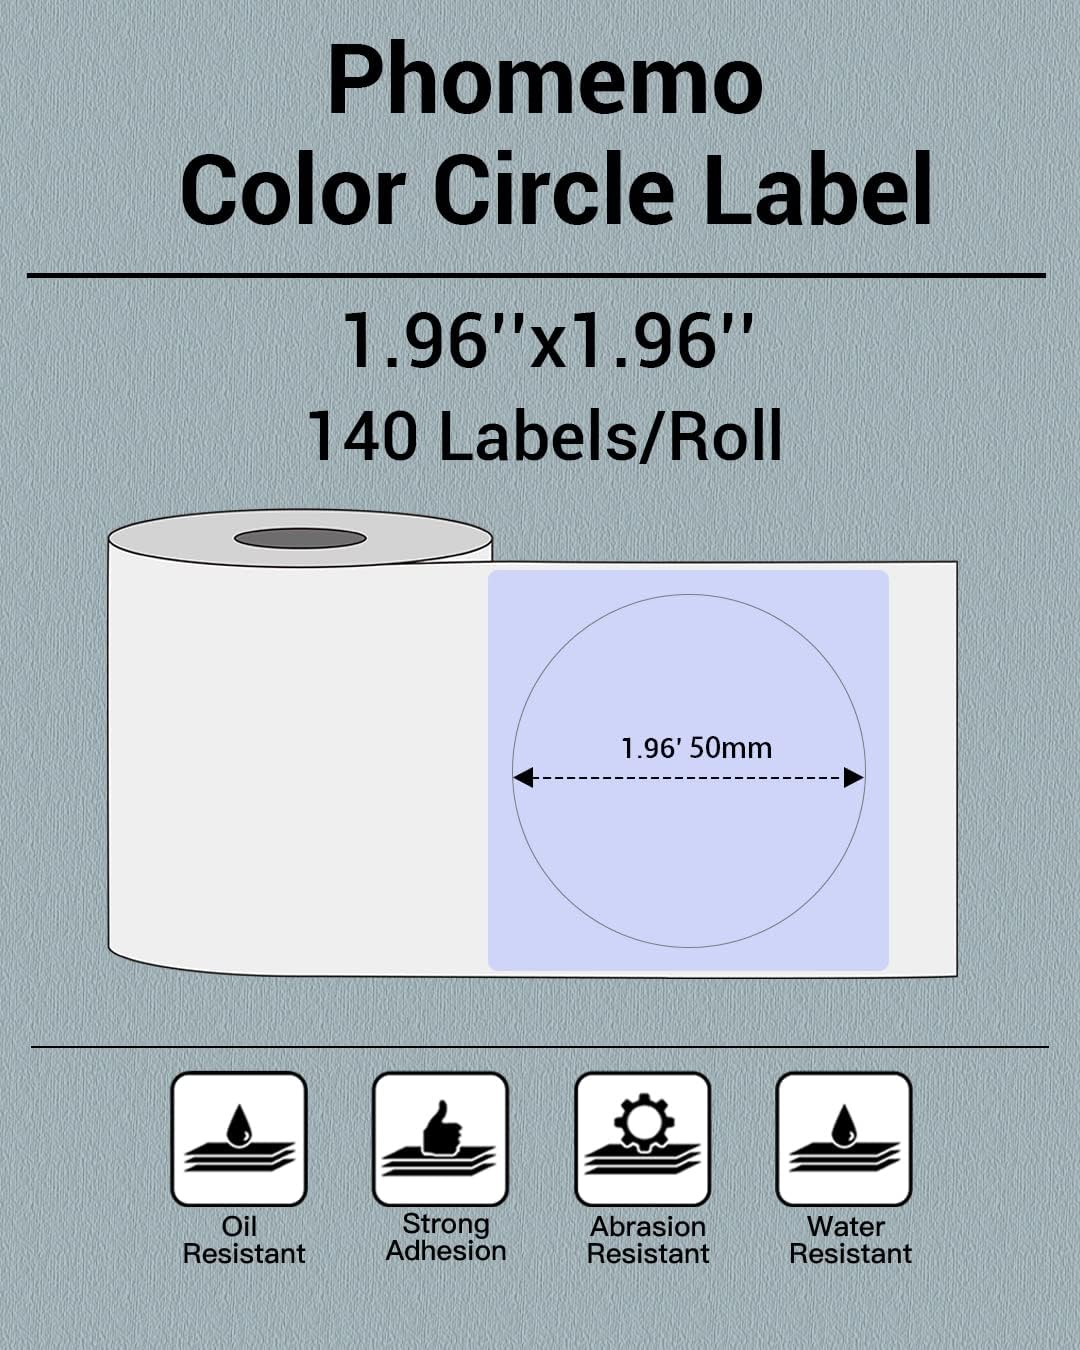 Phomemo Printer Labels 50x50mm/140Pcs Round/Purple